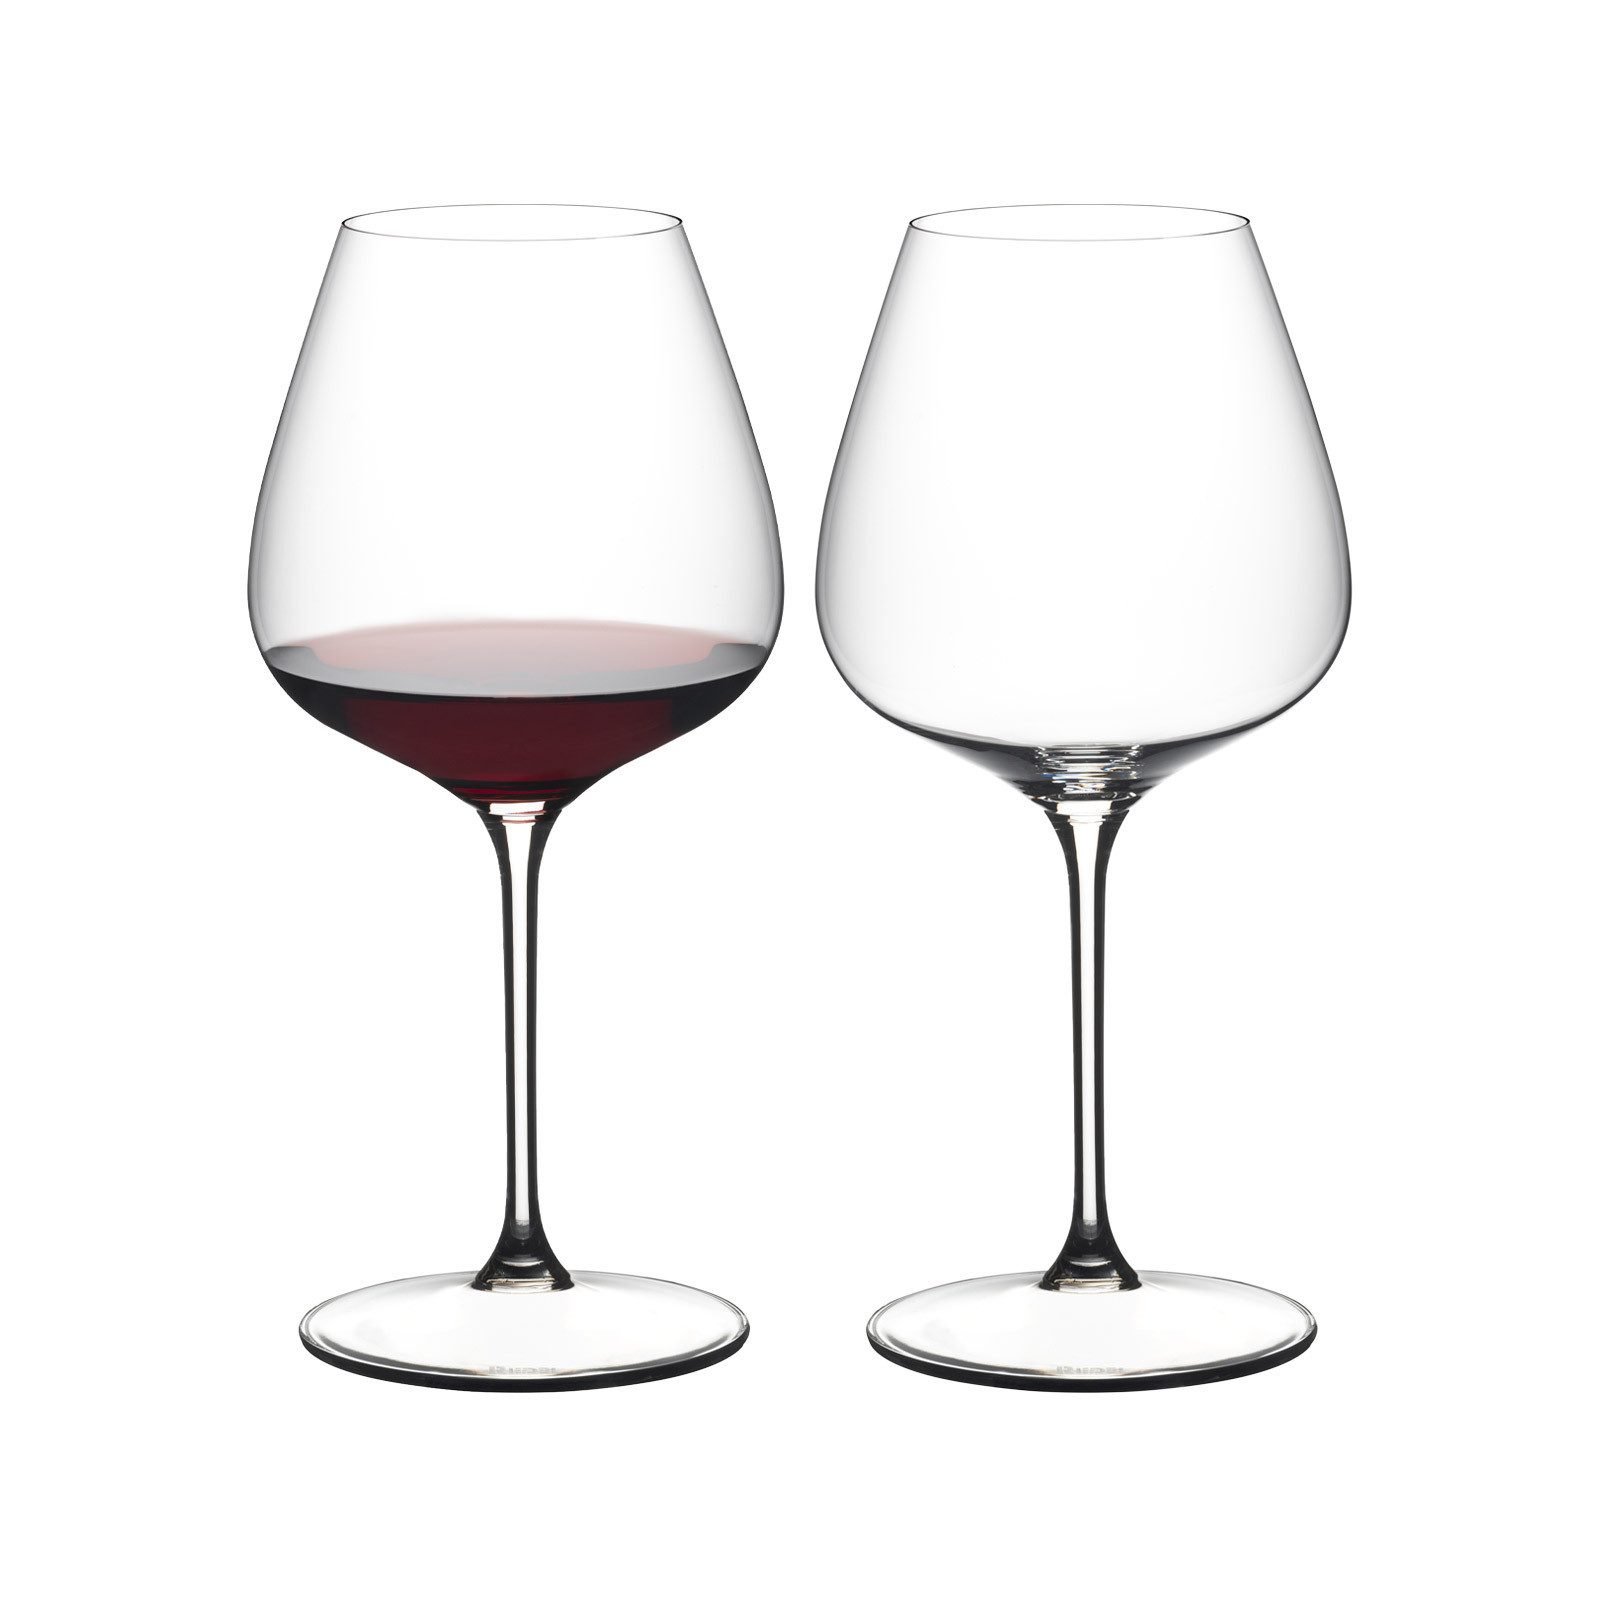 RIEDEL THE WINE GLASS COMPANY Rotweinglas Grape Pinot Noir / Nebbiolo Weingläser 750 ml, Glas